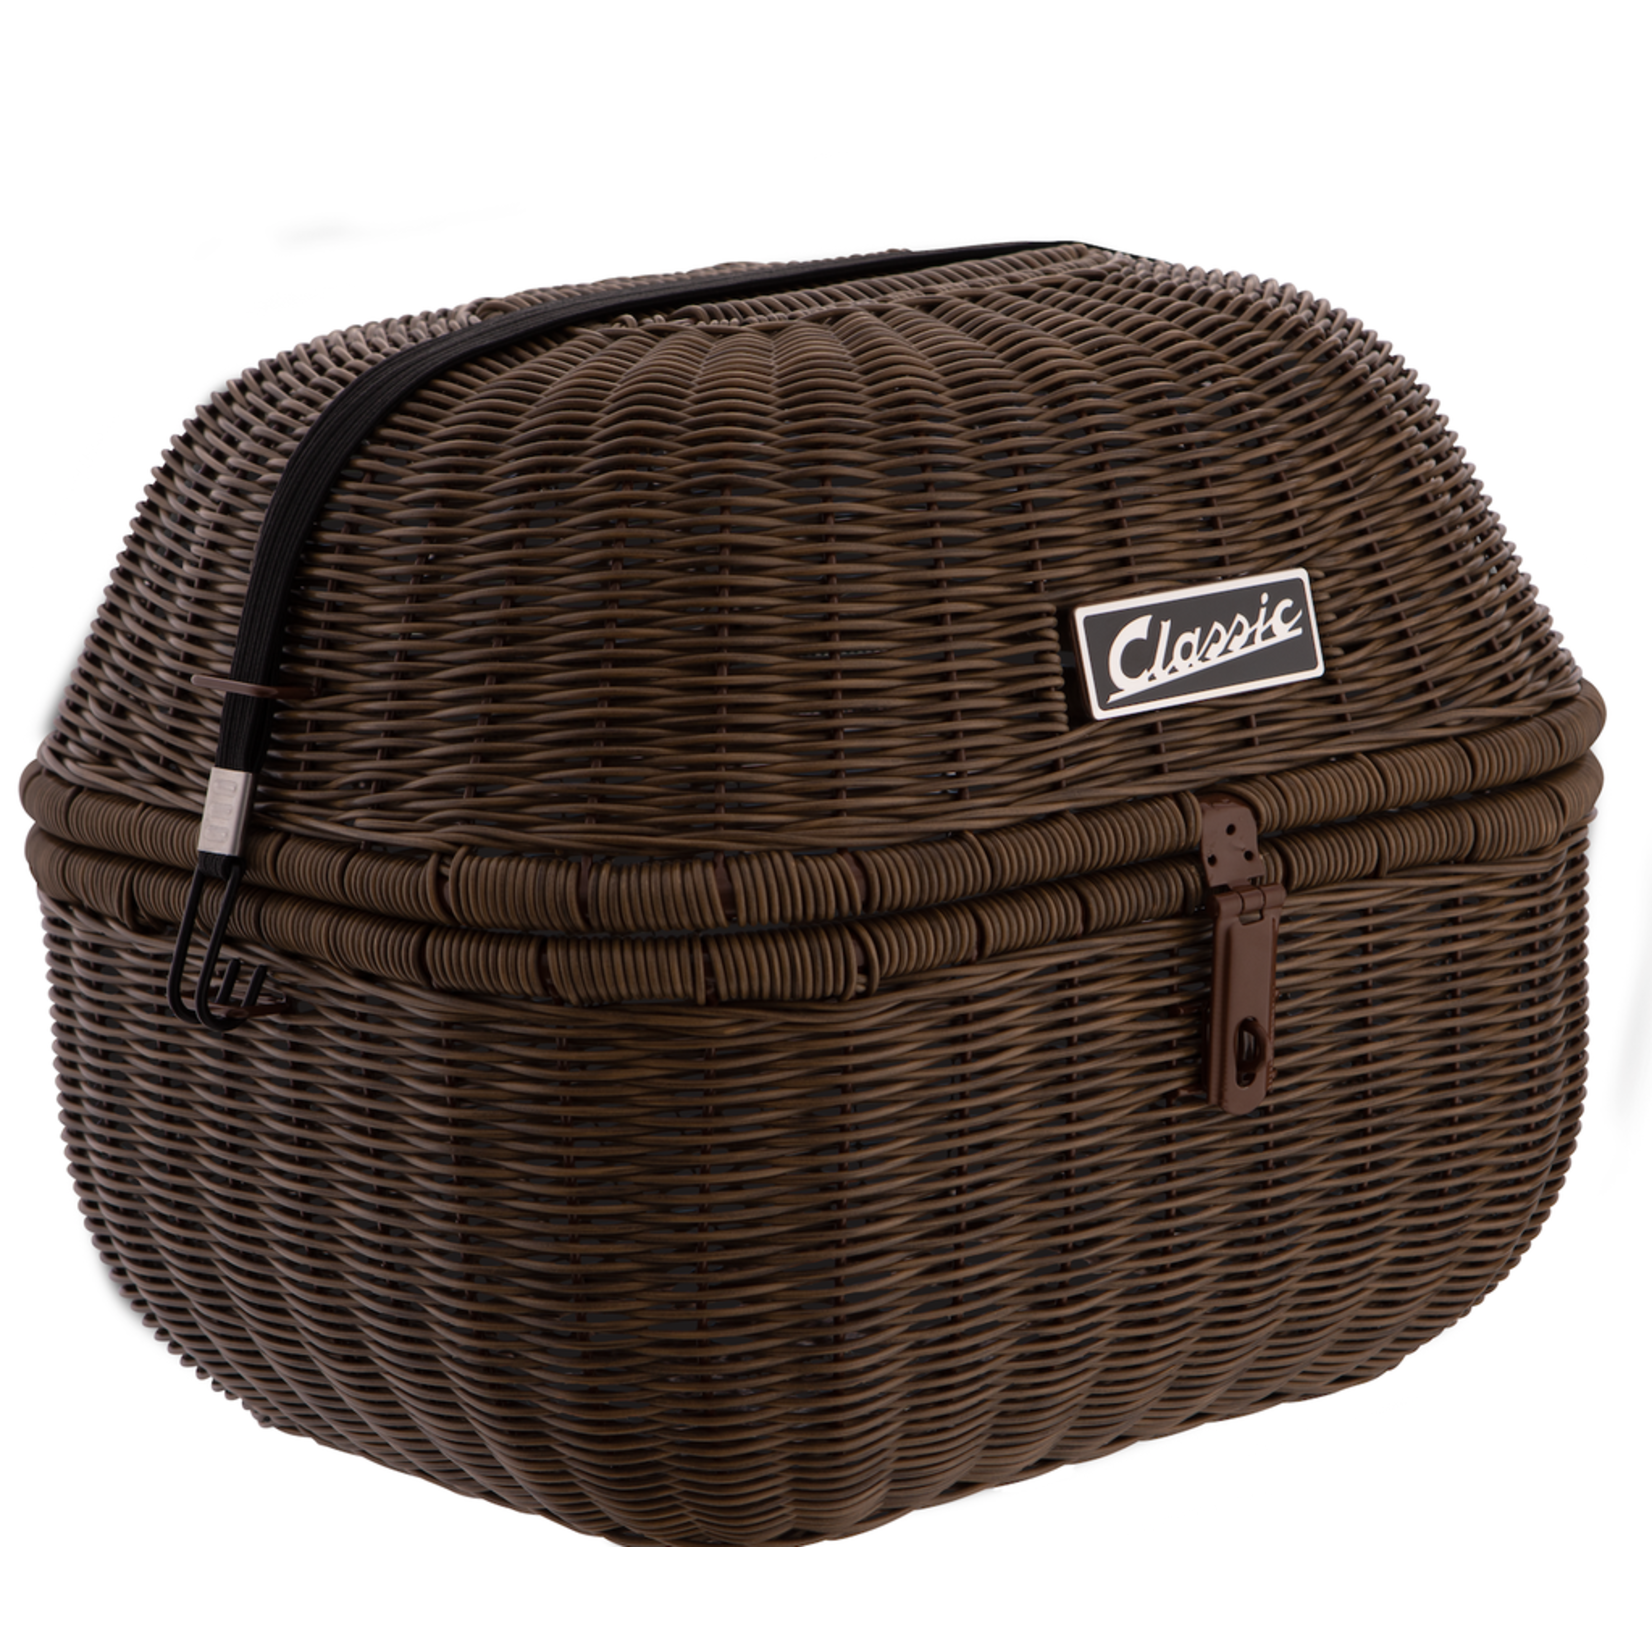 Accessories Top Case Basket, Classic Dark Brown